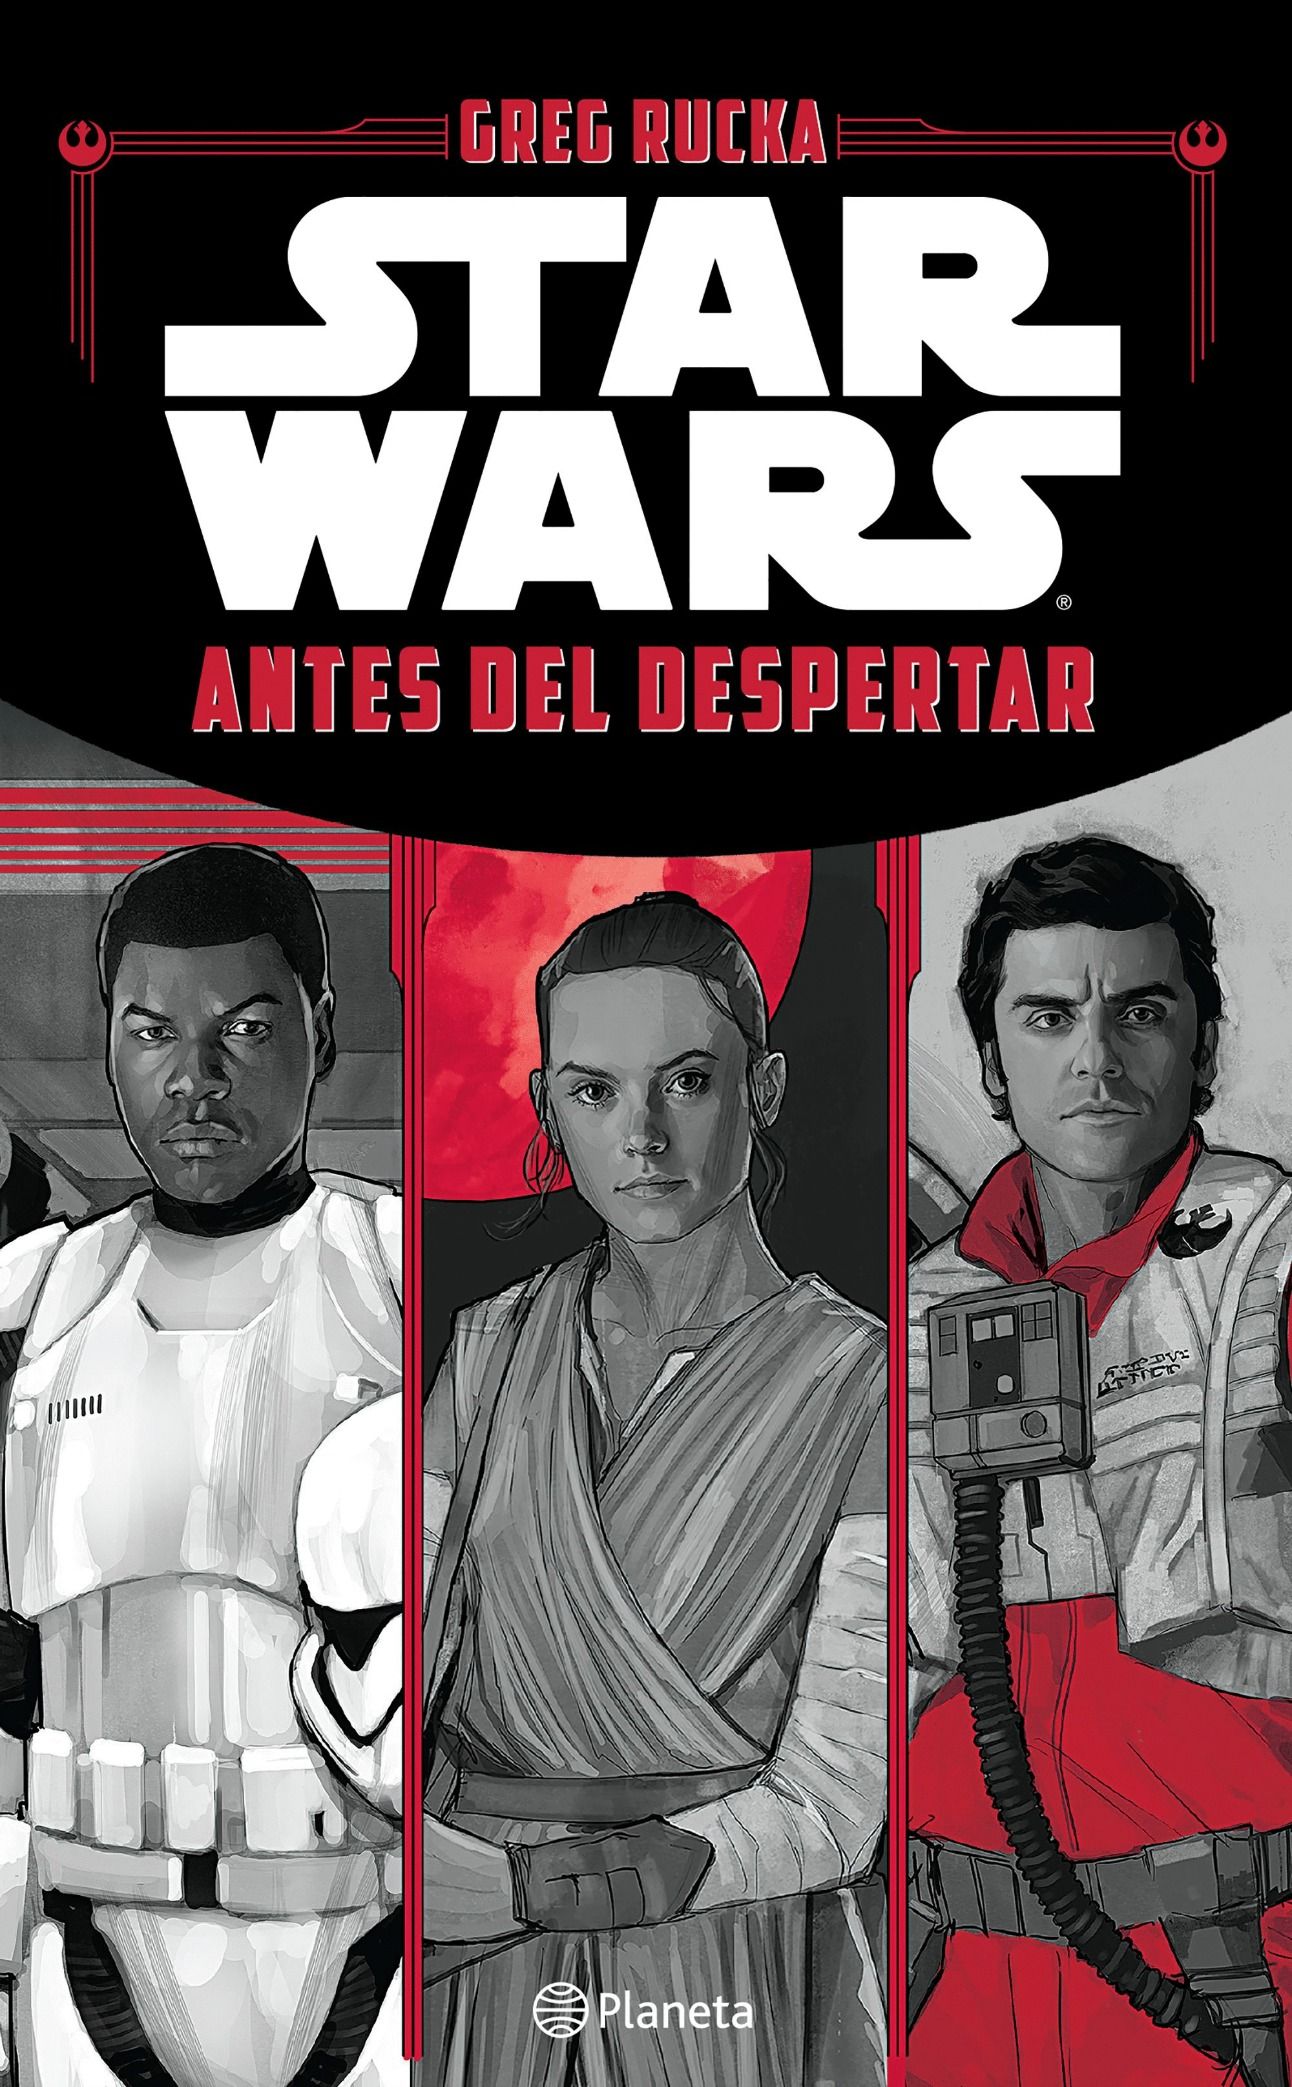 Star Wars: Before the Awakening book cover